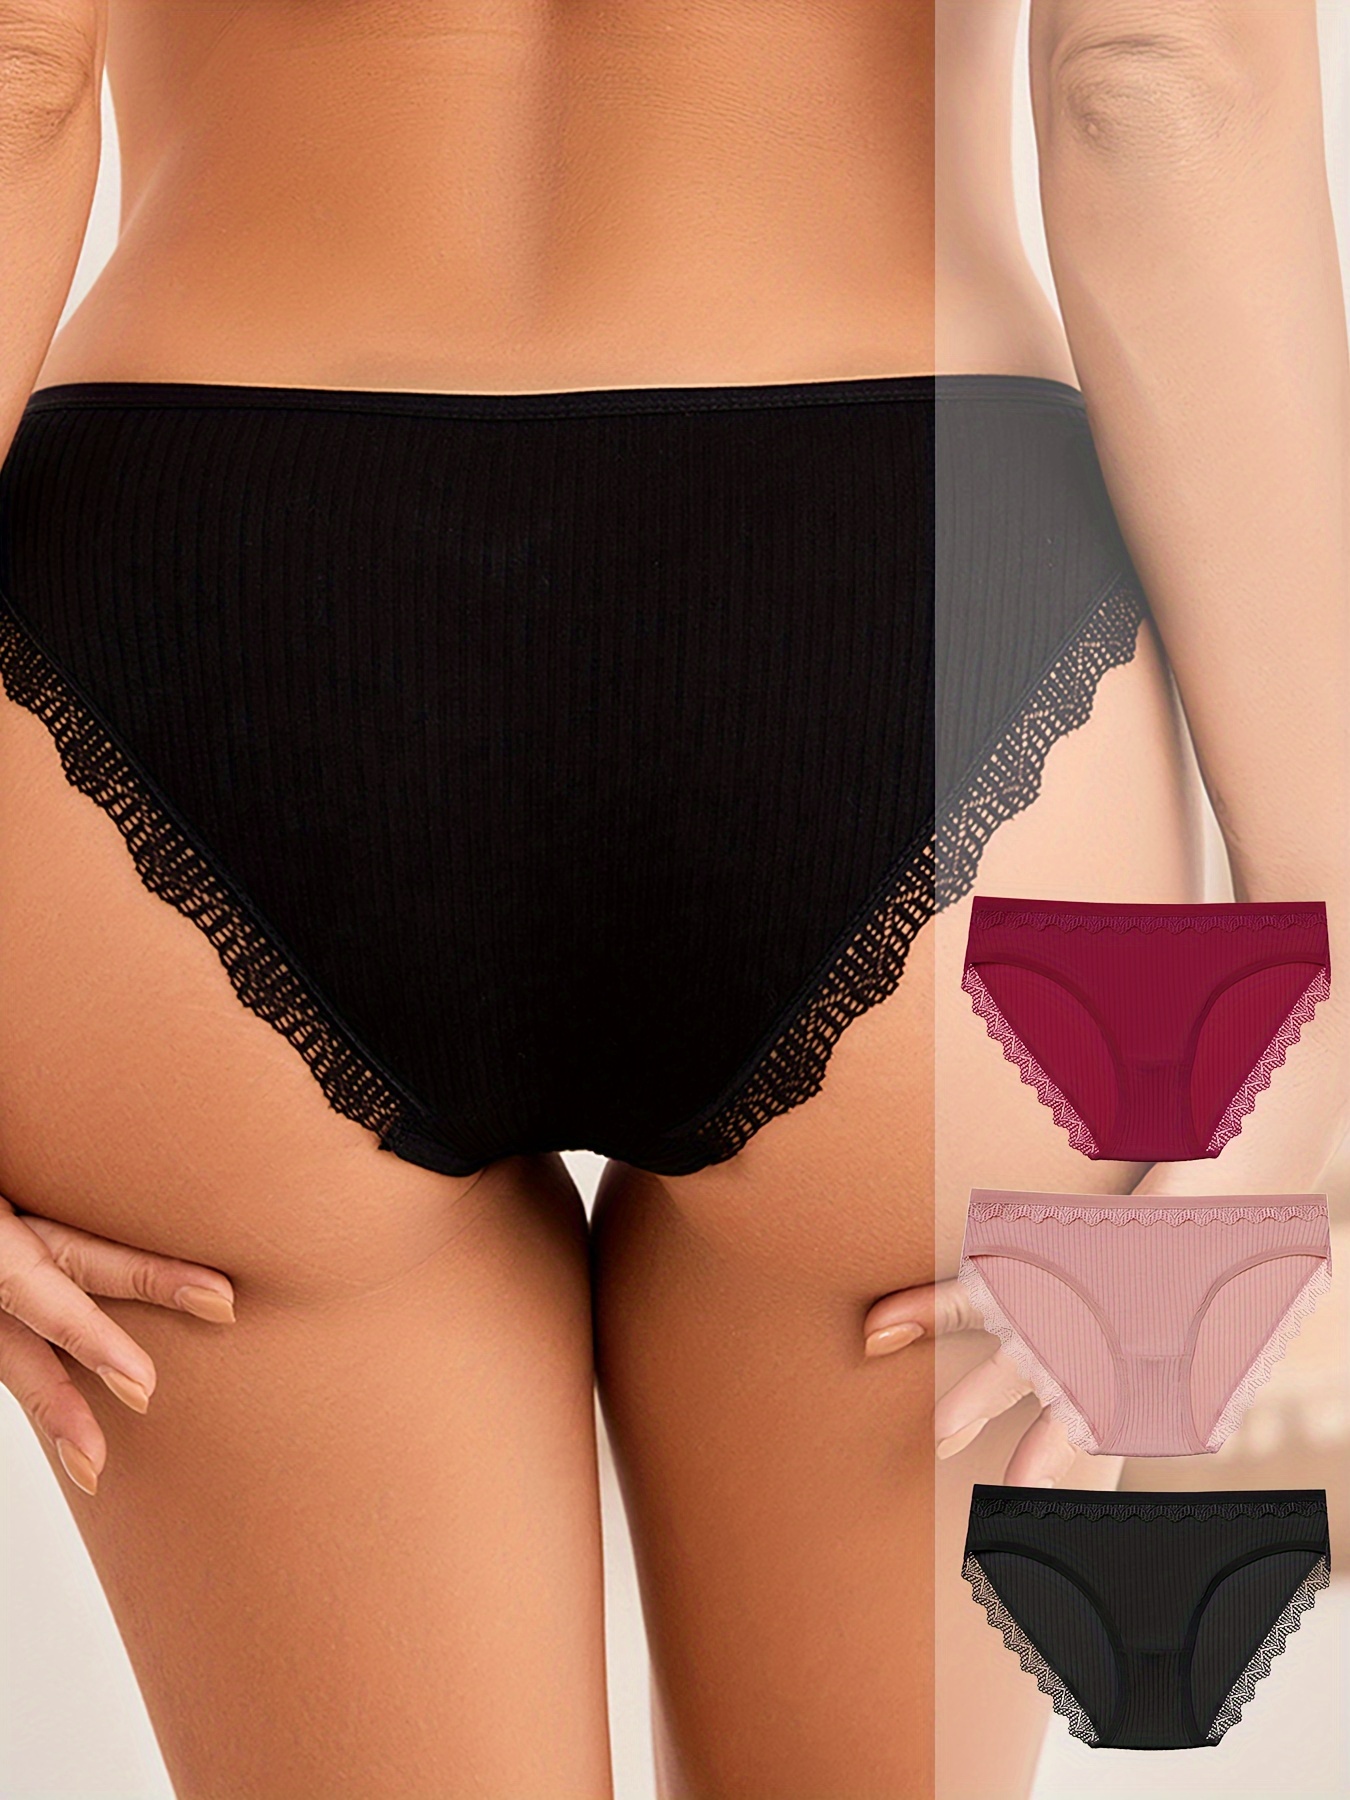 Buy Women's Cotton Lace Trim Underwear Hipster Panties at Best